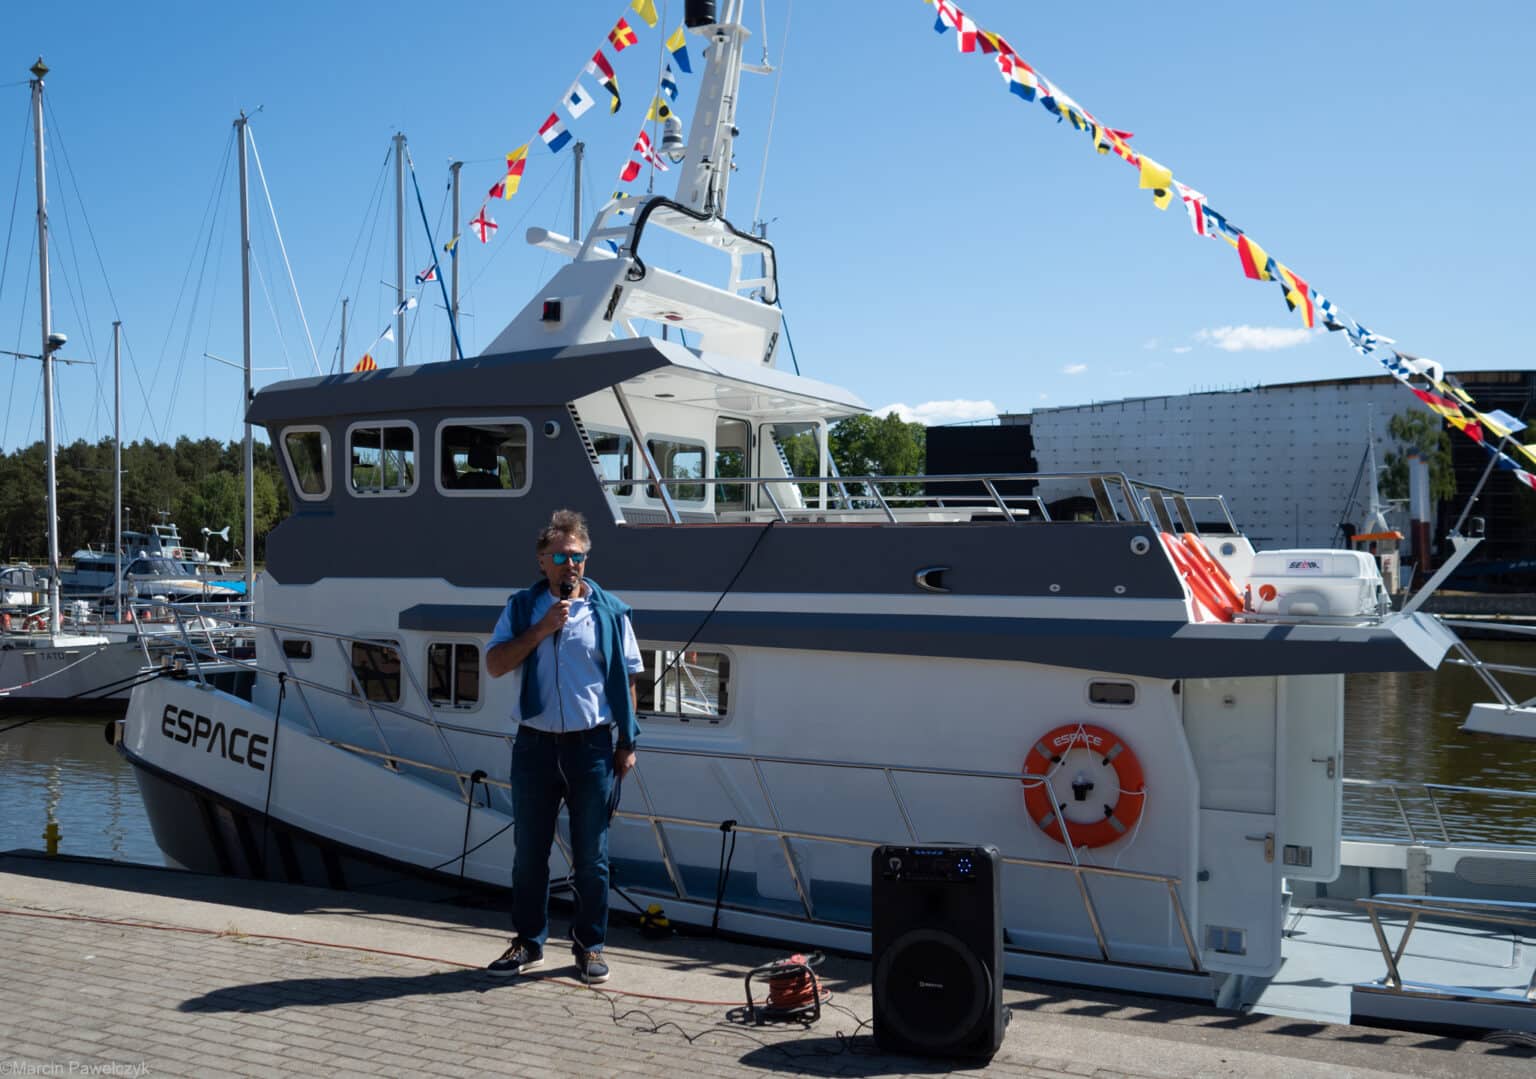 Espace new expedition vessel Tomasz Stachura